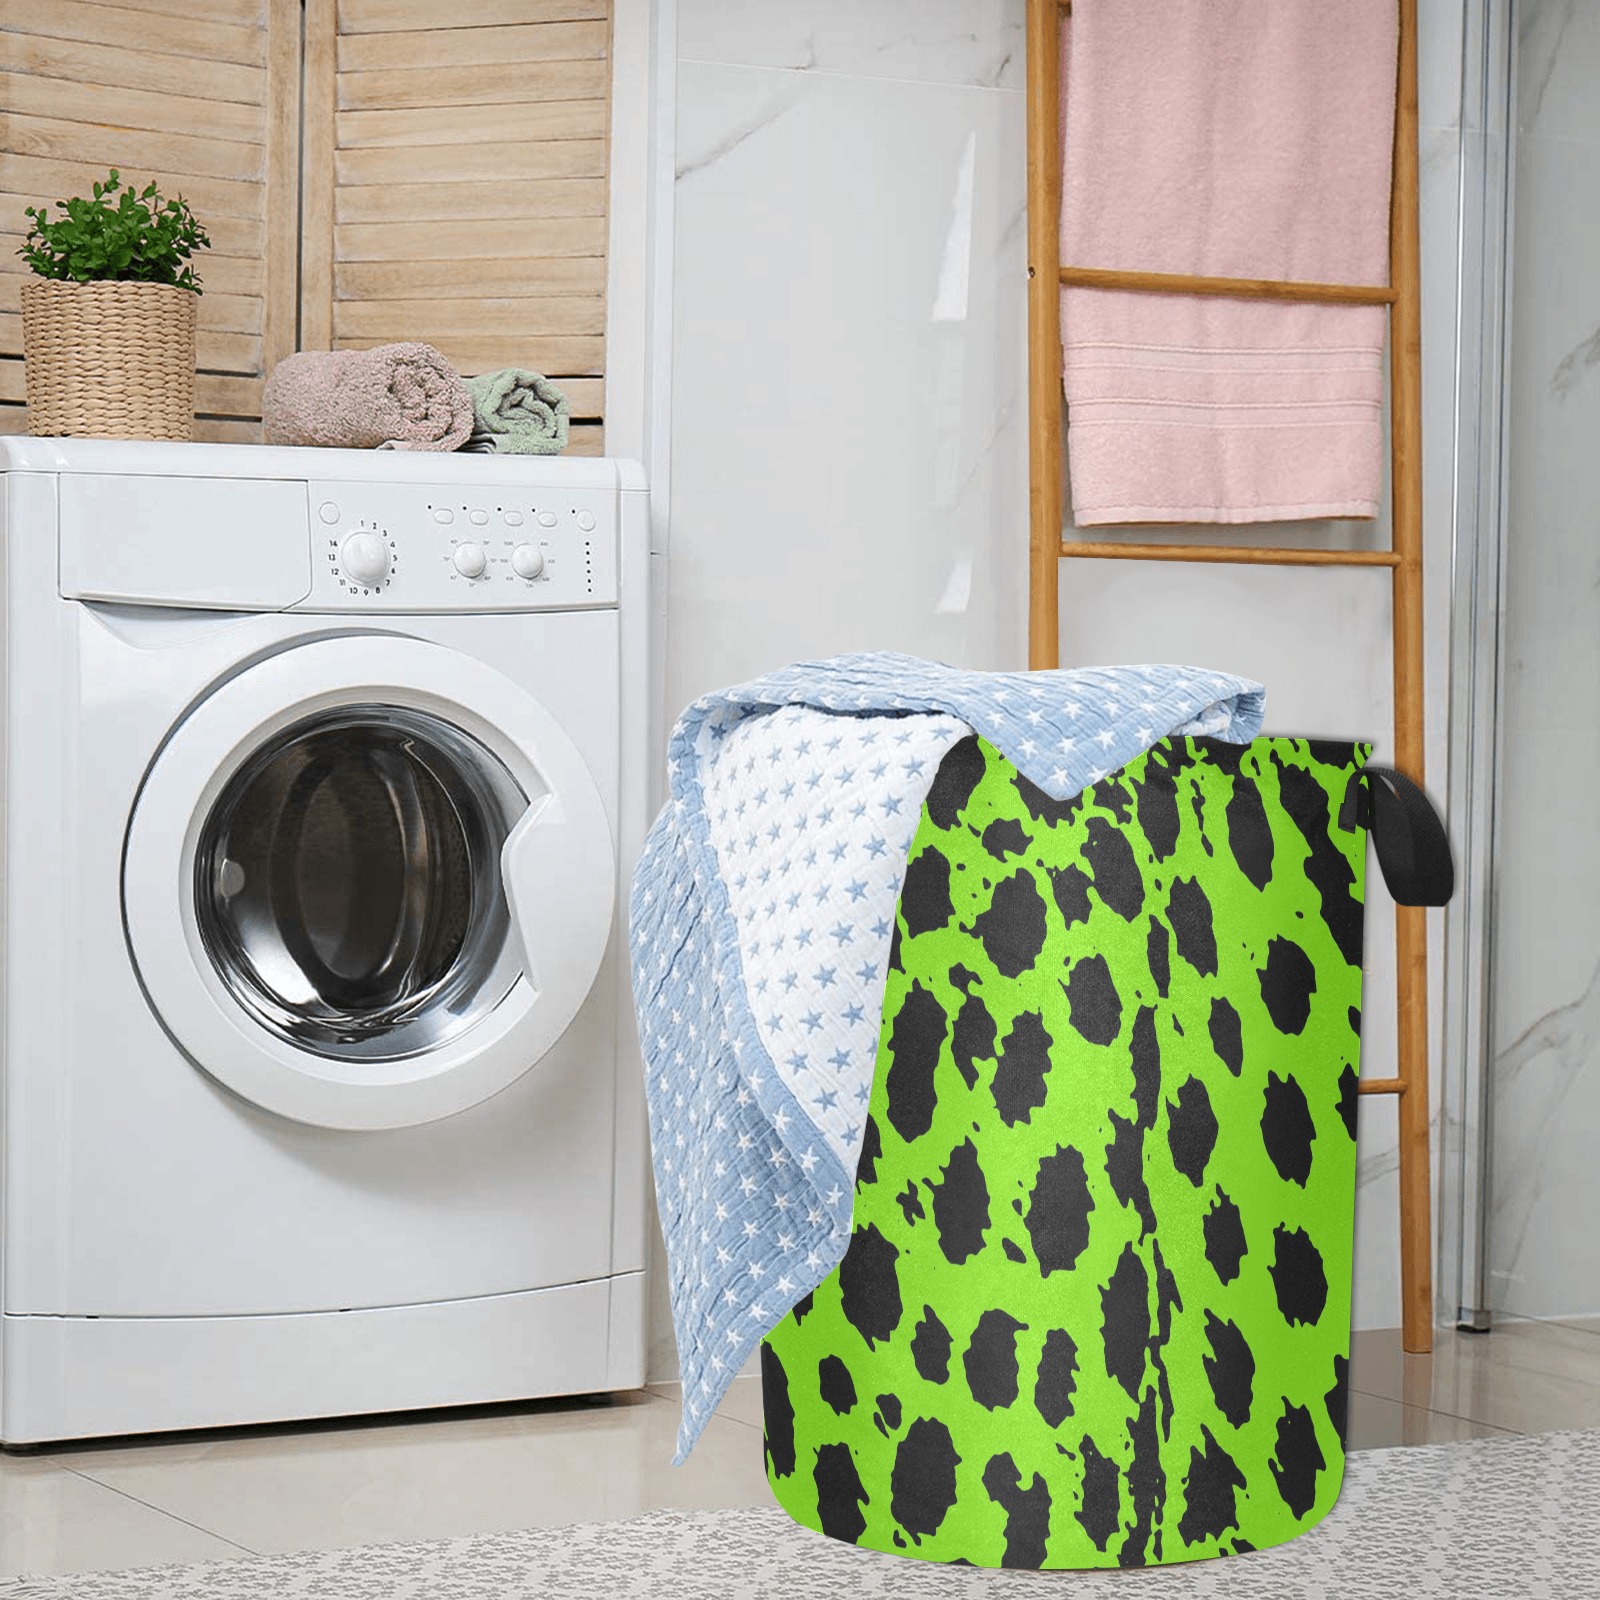 Cheetah Lime Green Laundry Bag (Large)